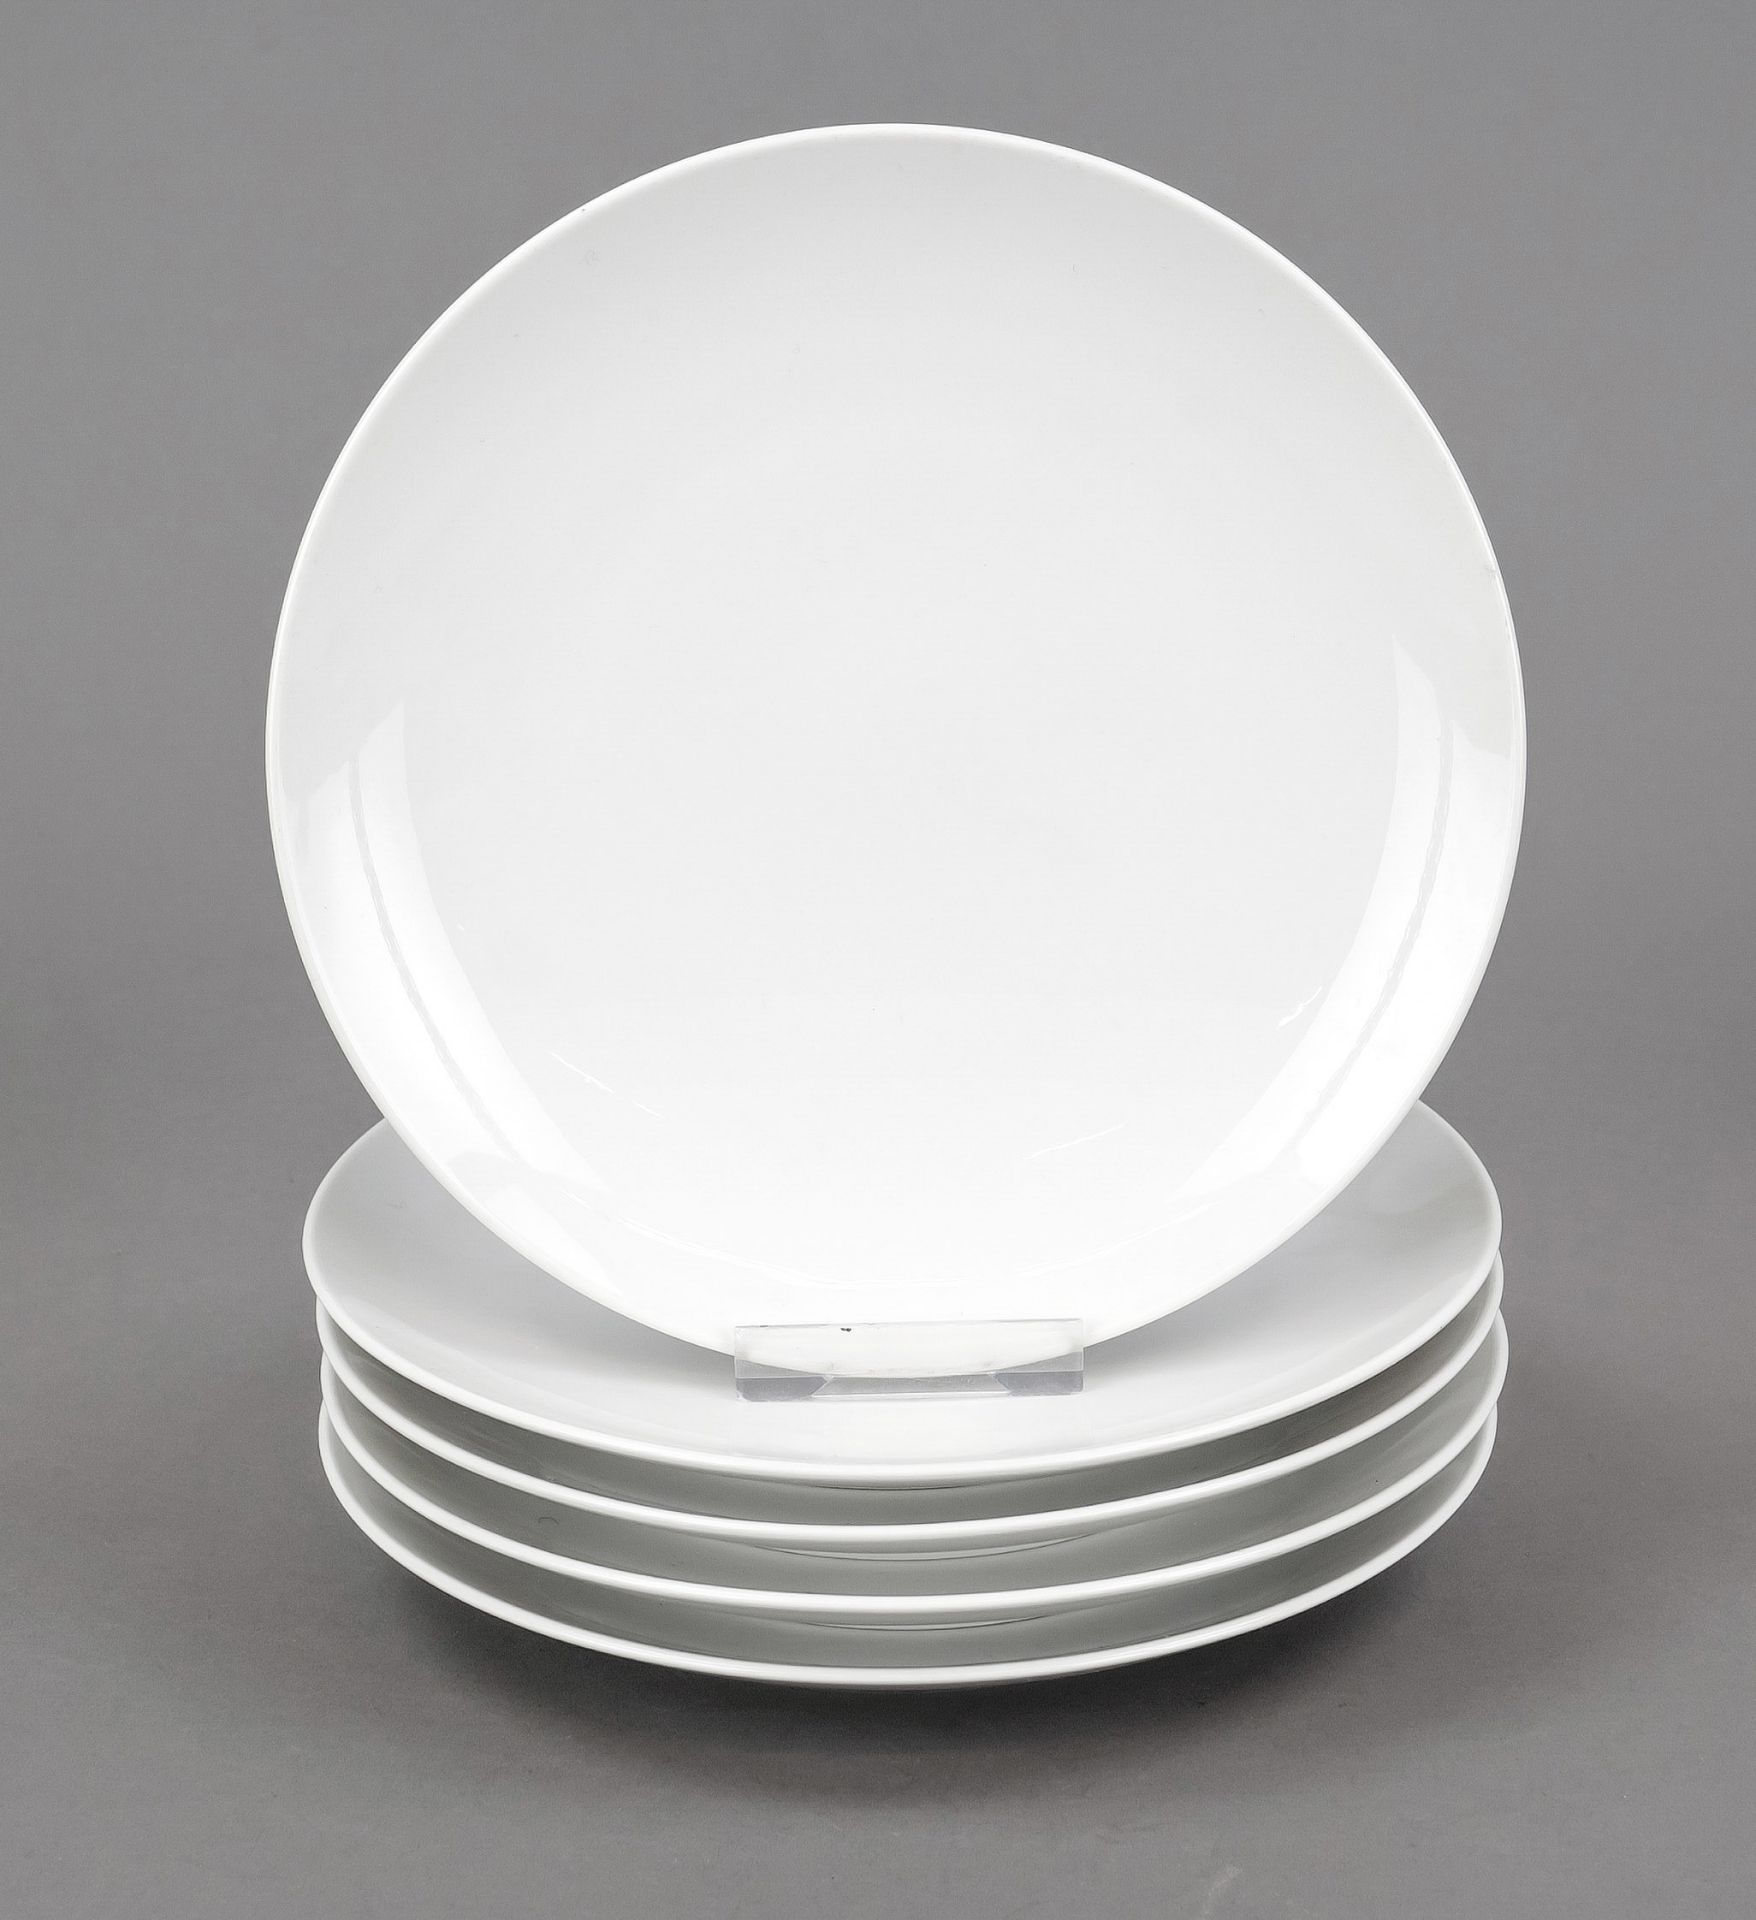 Five starter or dessert plates, KPM Berlin, marks 1962-92, 1st choice, white, shape Urbino, design